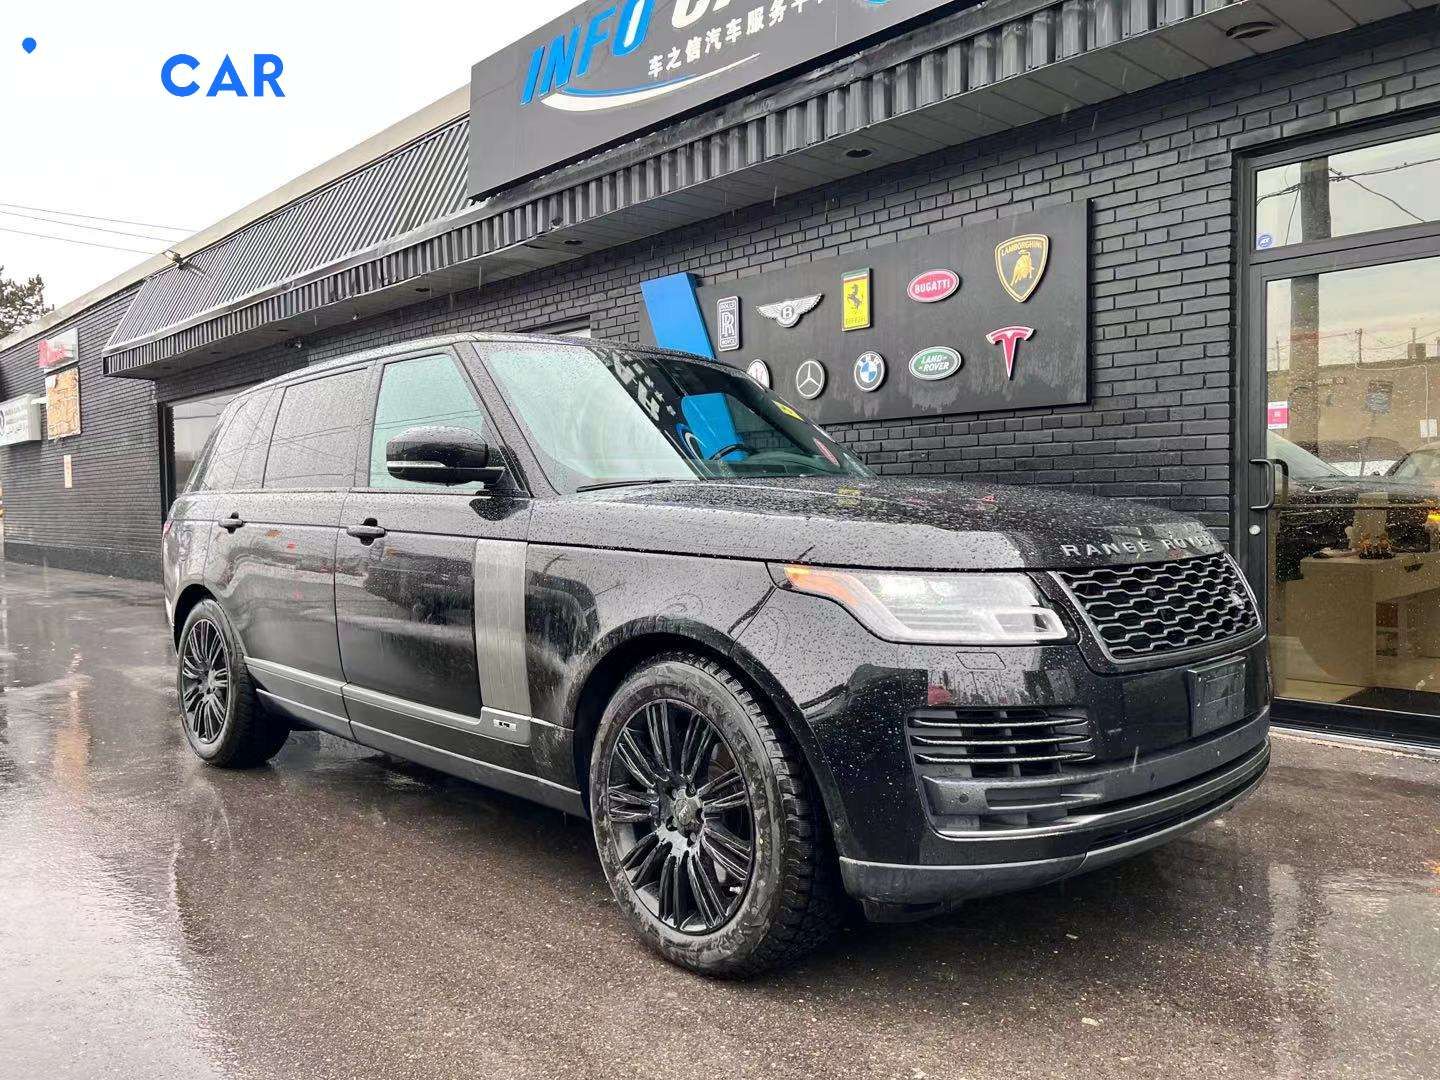 2019 Land Rover Range Rover LWB - INFOCAR - Toronto Auto Trading Platform